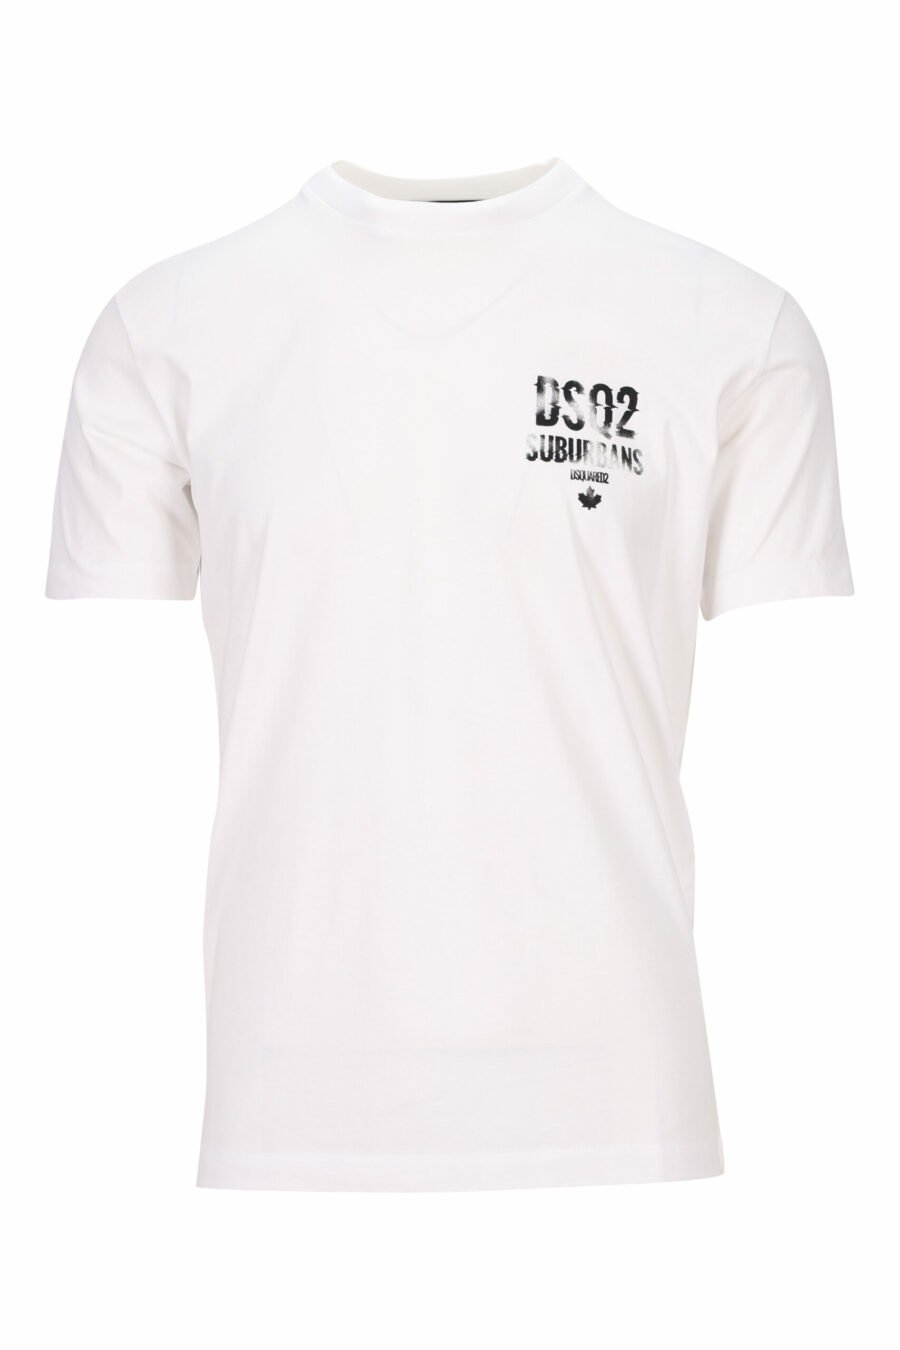 White T-shirt with black "suburbans" mini-logo - 8054148512842 scaled